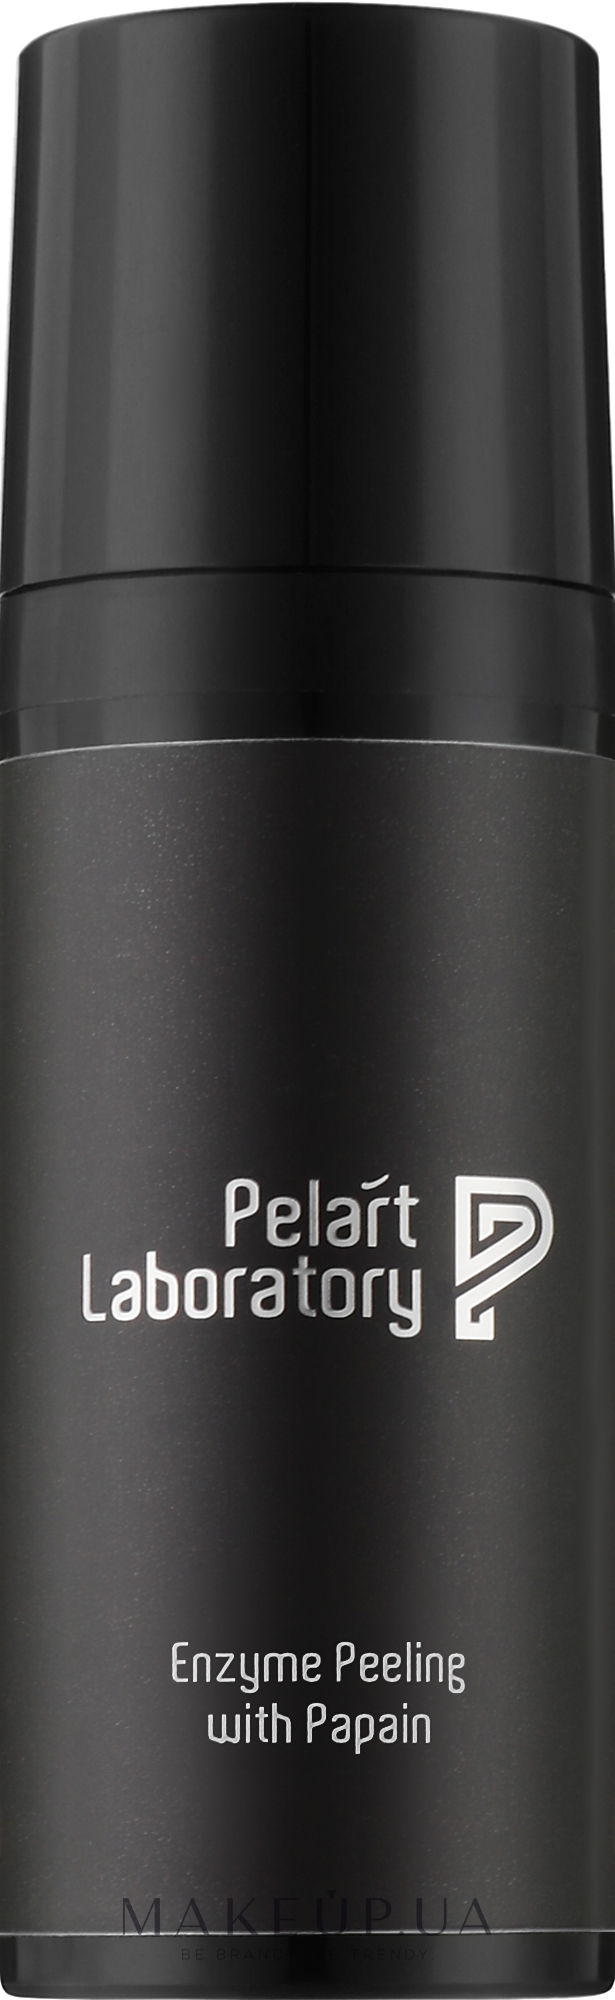 Ензимний пілінг з папаїном - Pelart Laboratory Enzyme Peeling With Papain — фото 50ml